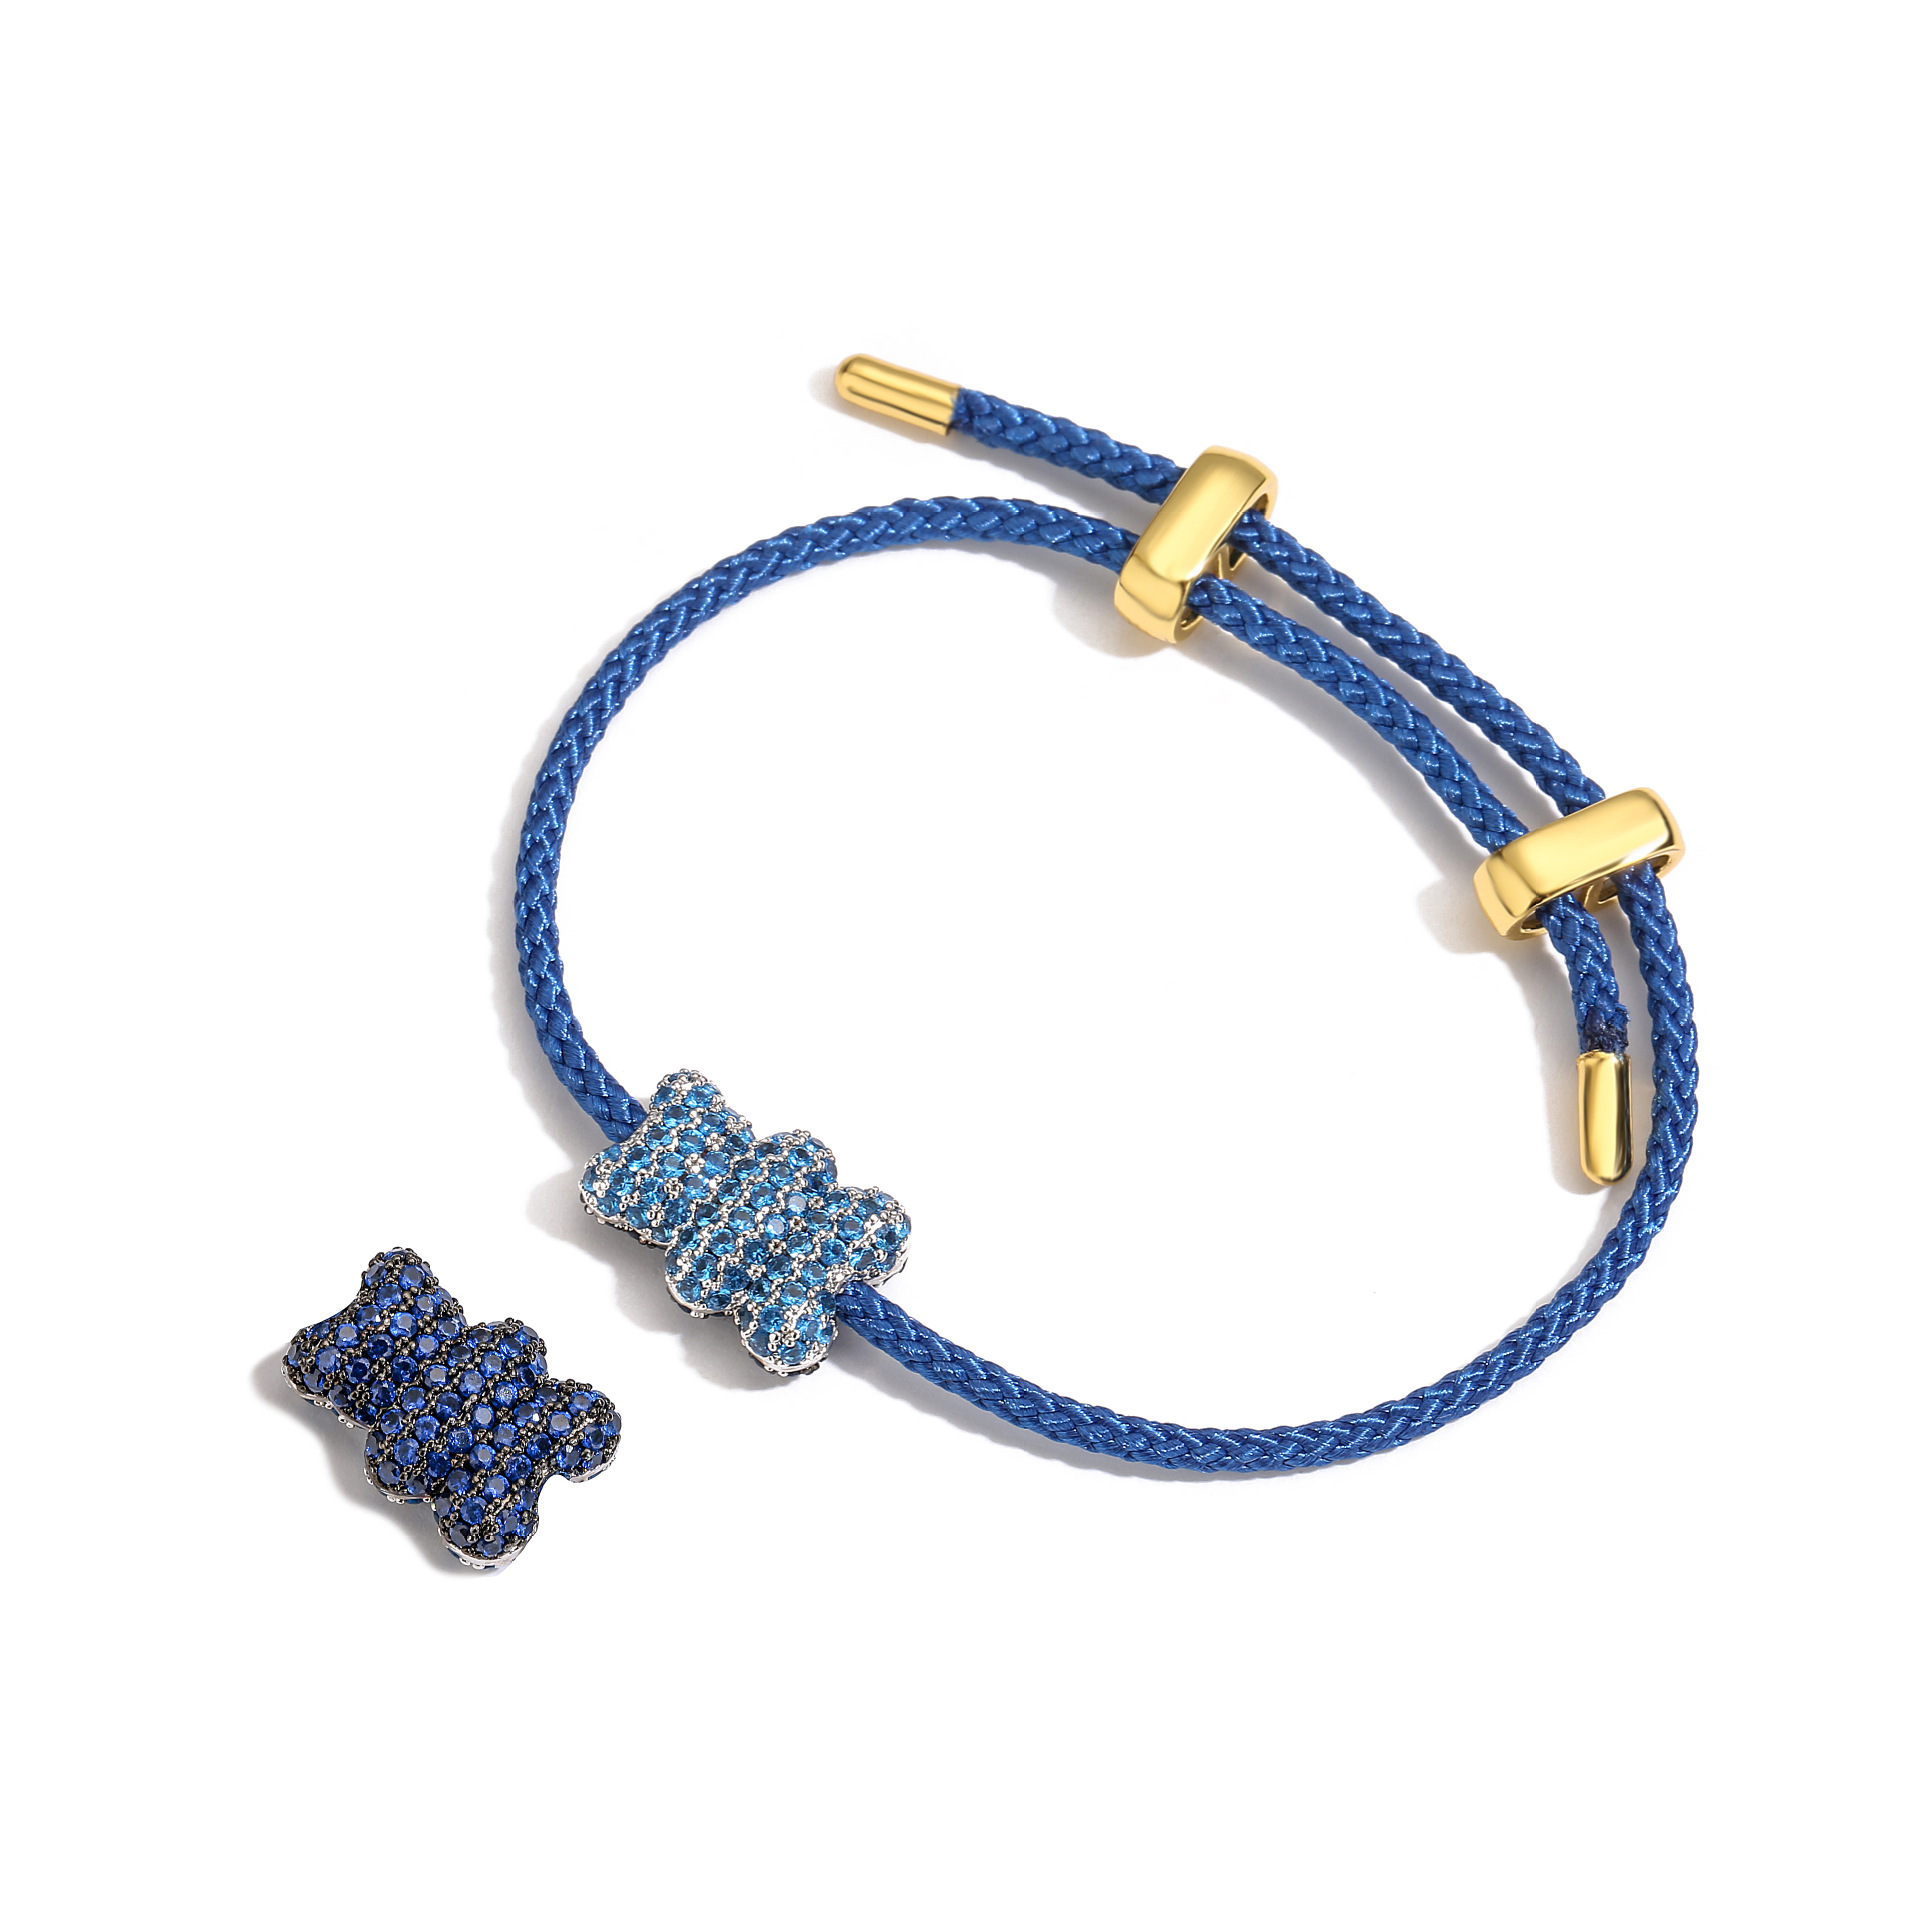 Dark blue bracelet